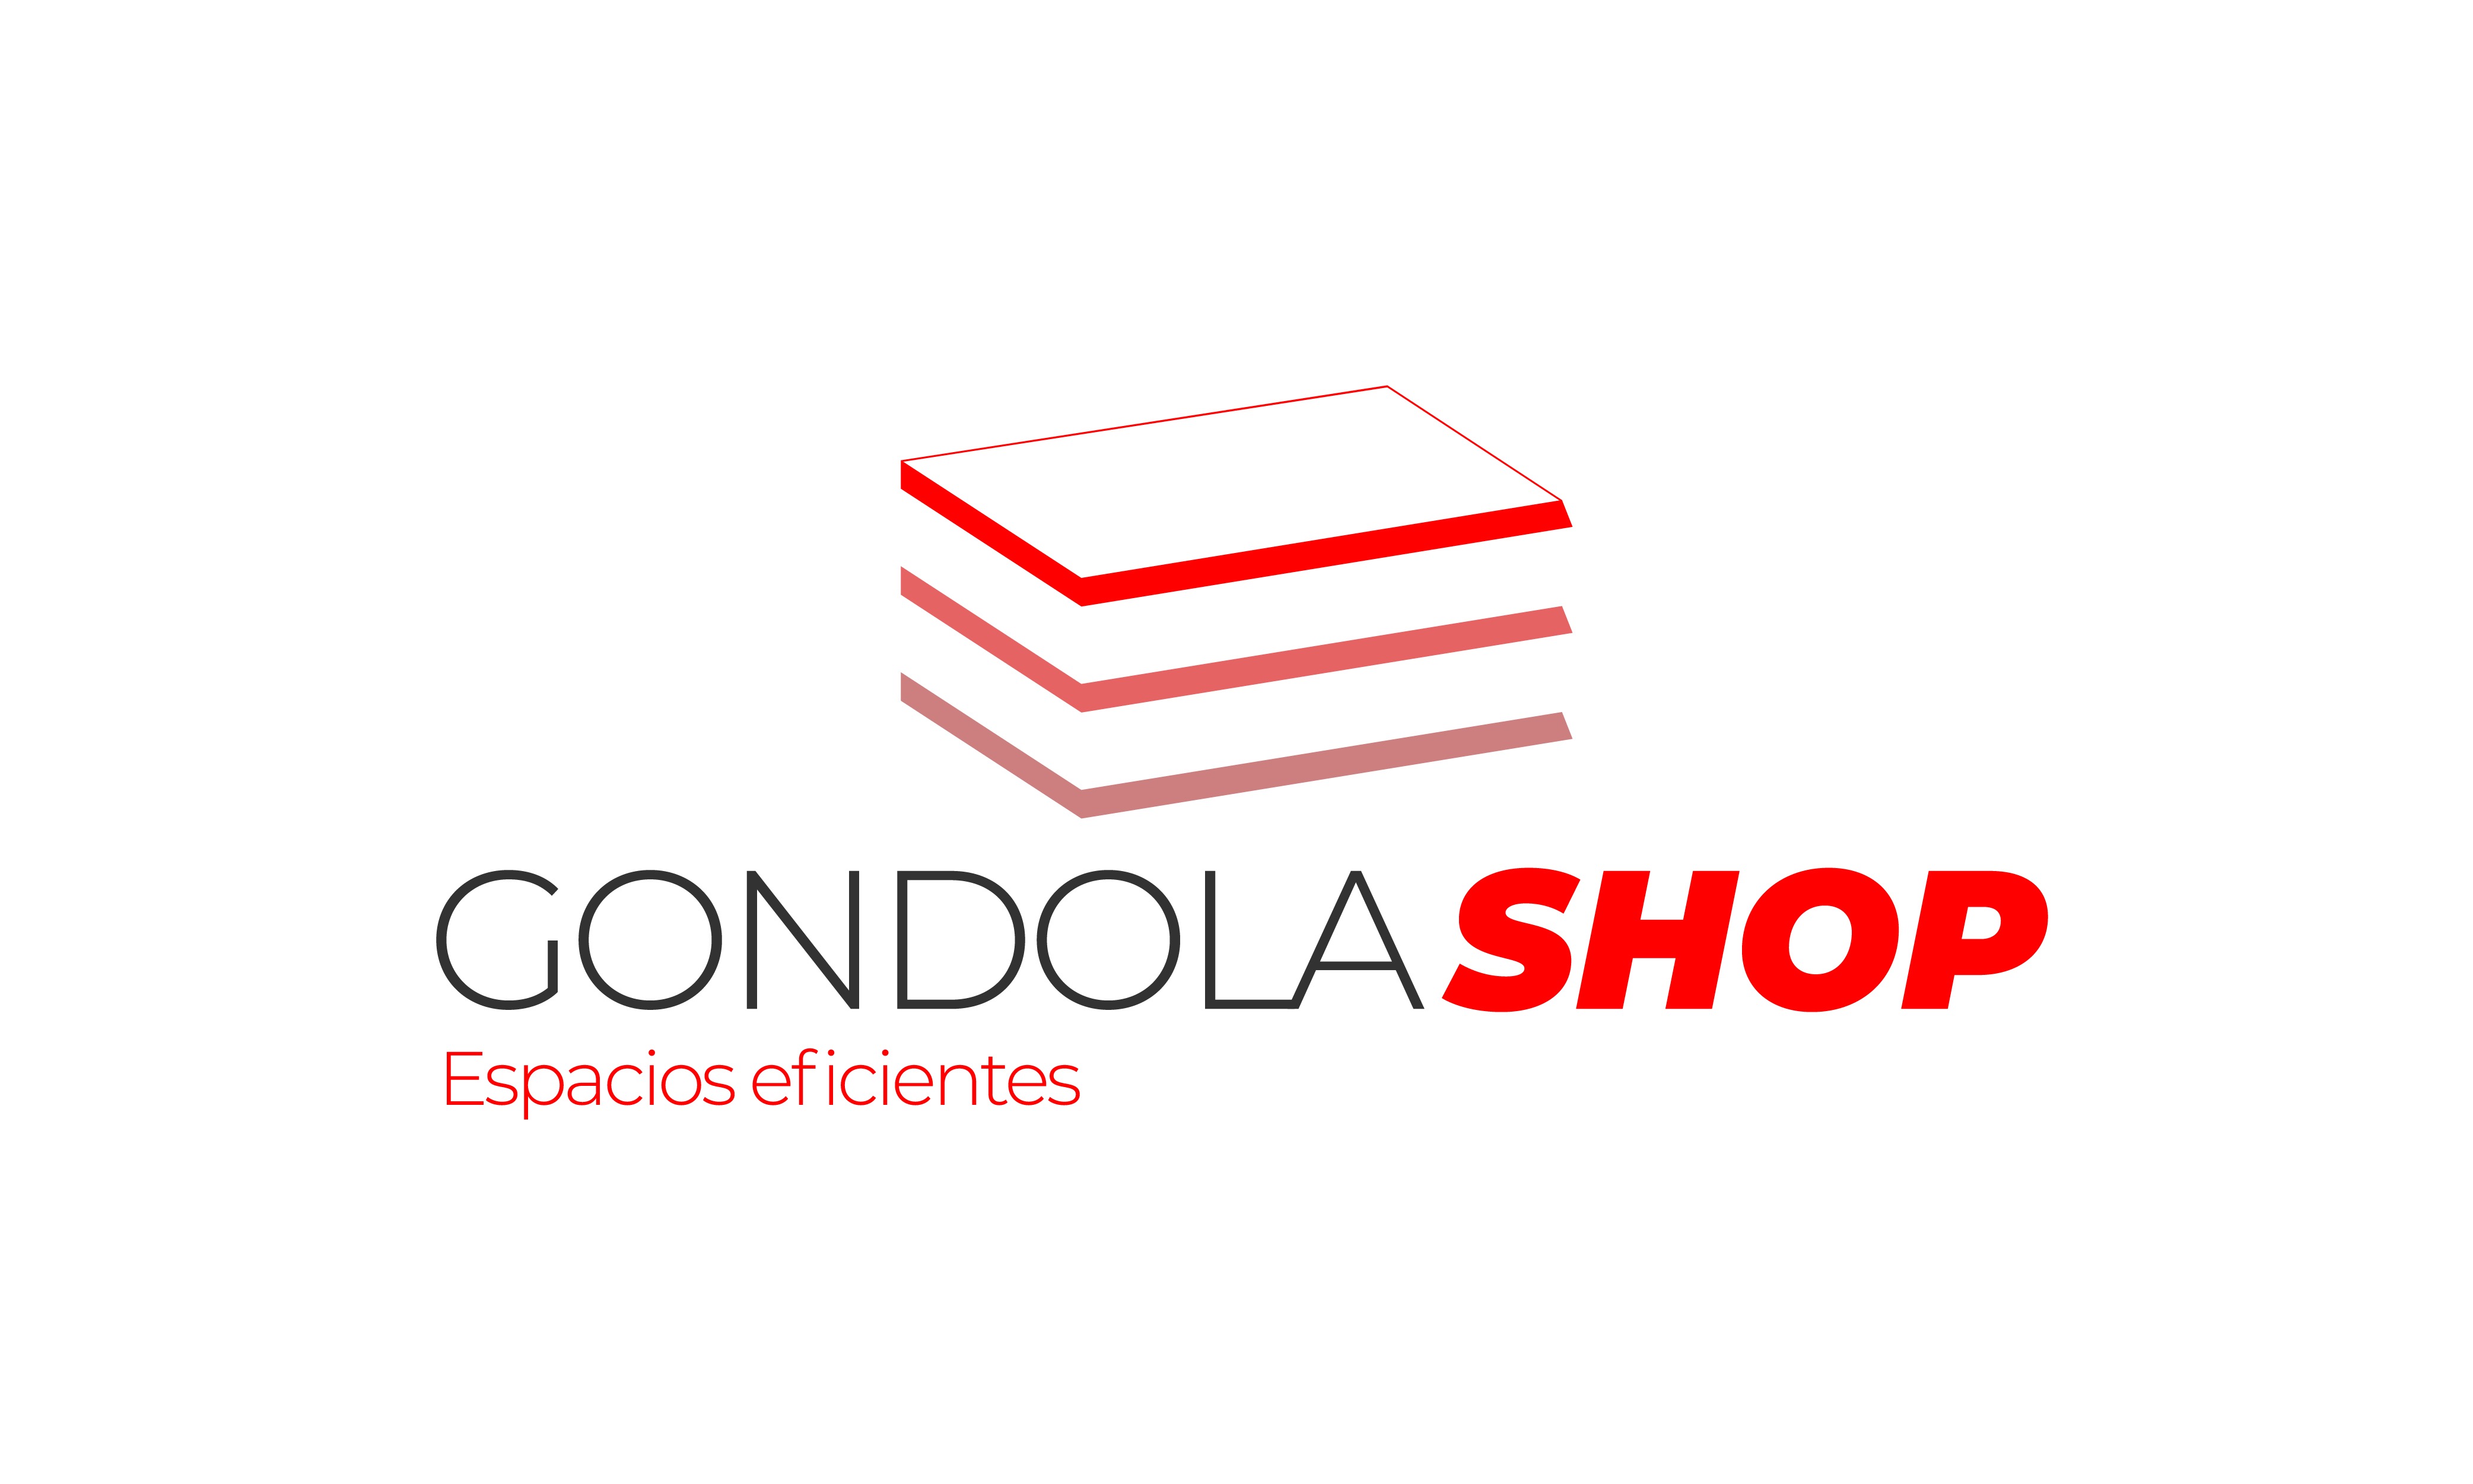 GONDOLA SHOP